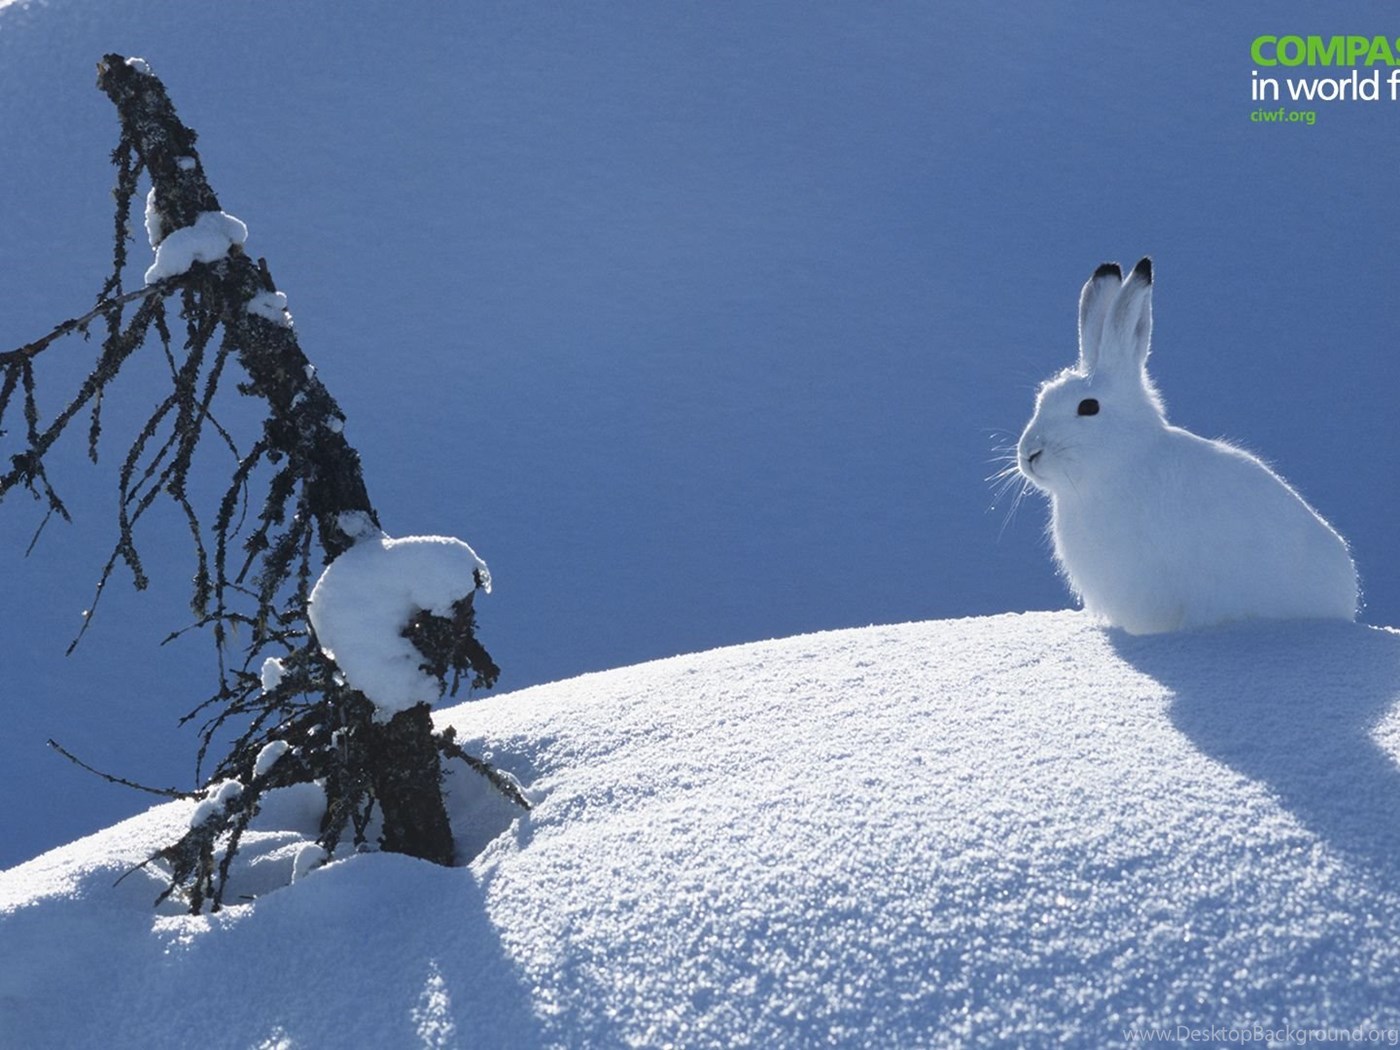 Заяц в сугробе. Заяц зимой. Зайчик зимой. Зимнее поле с зайцем. Заяц в зимнем лесу.